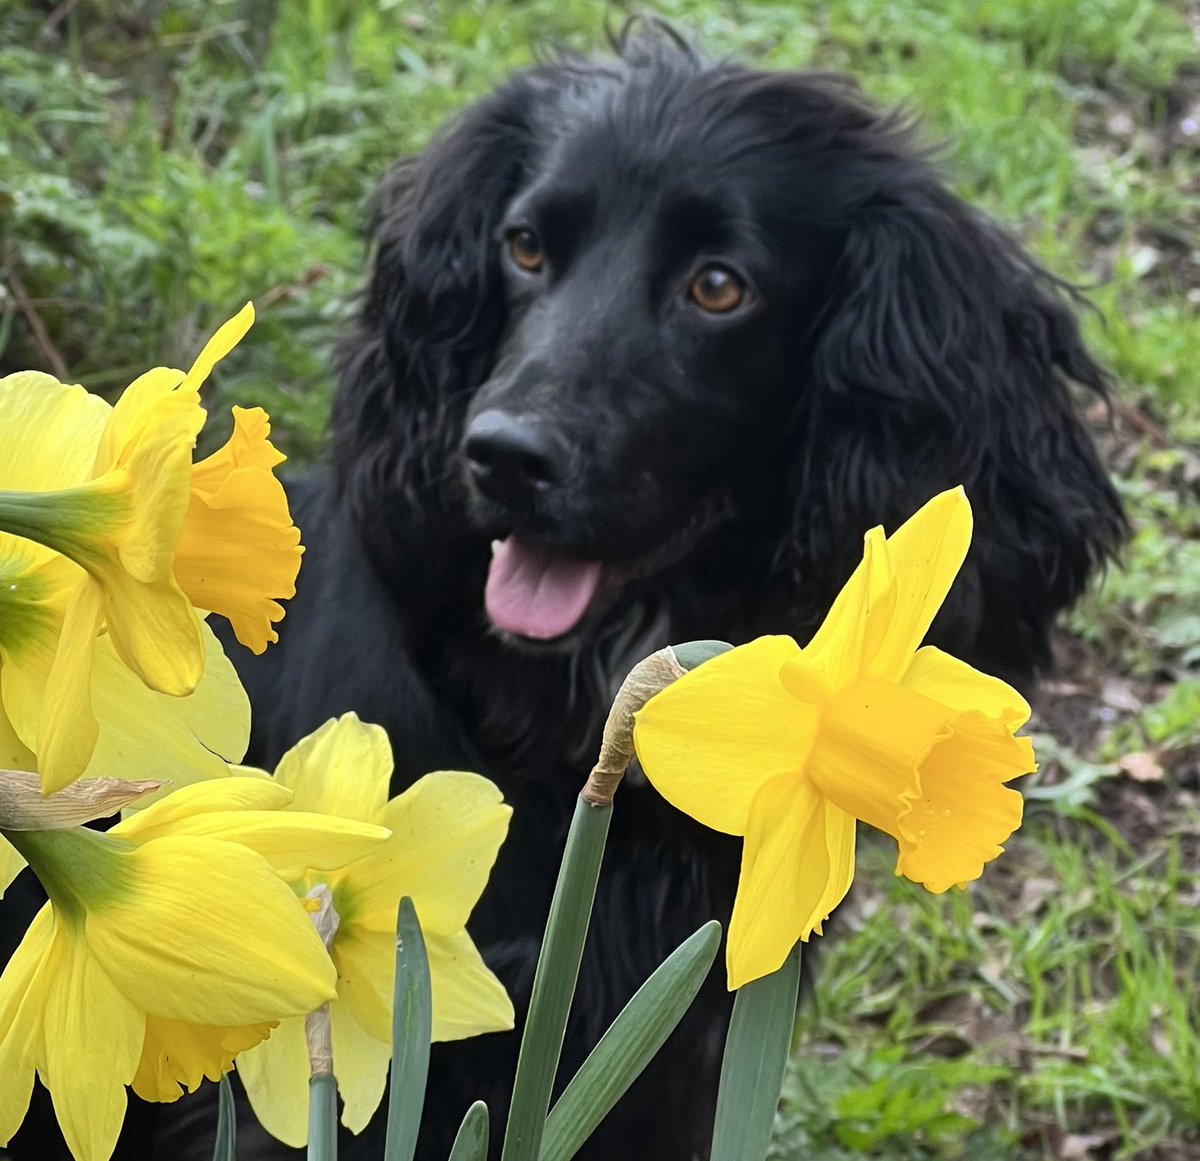 Spring has sprung ! #spring #gardensoftwitter #dogsoftwitter